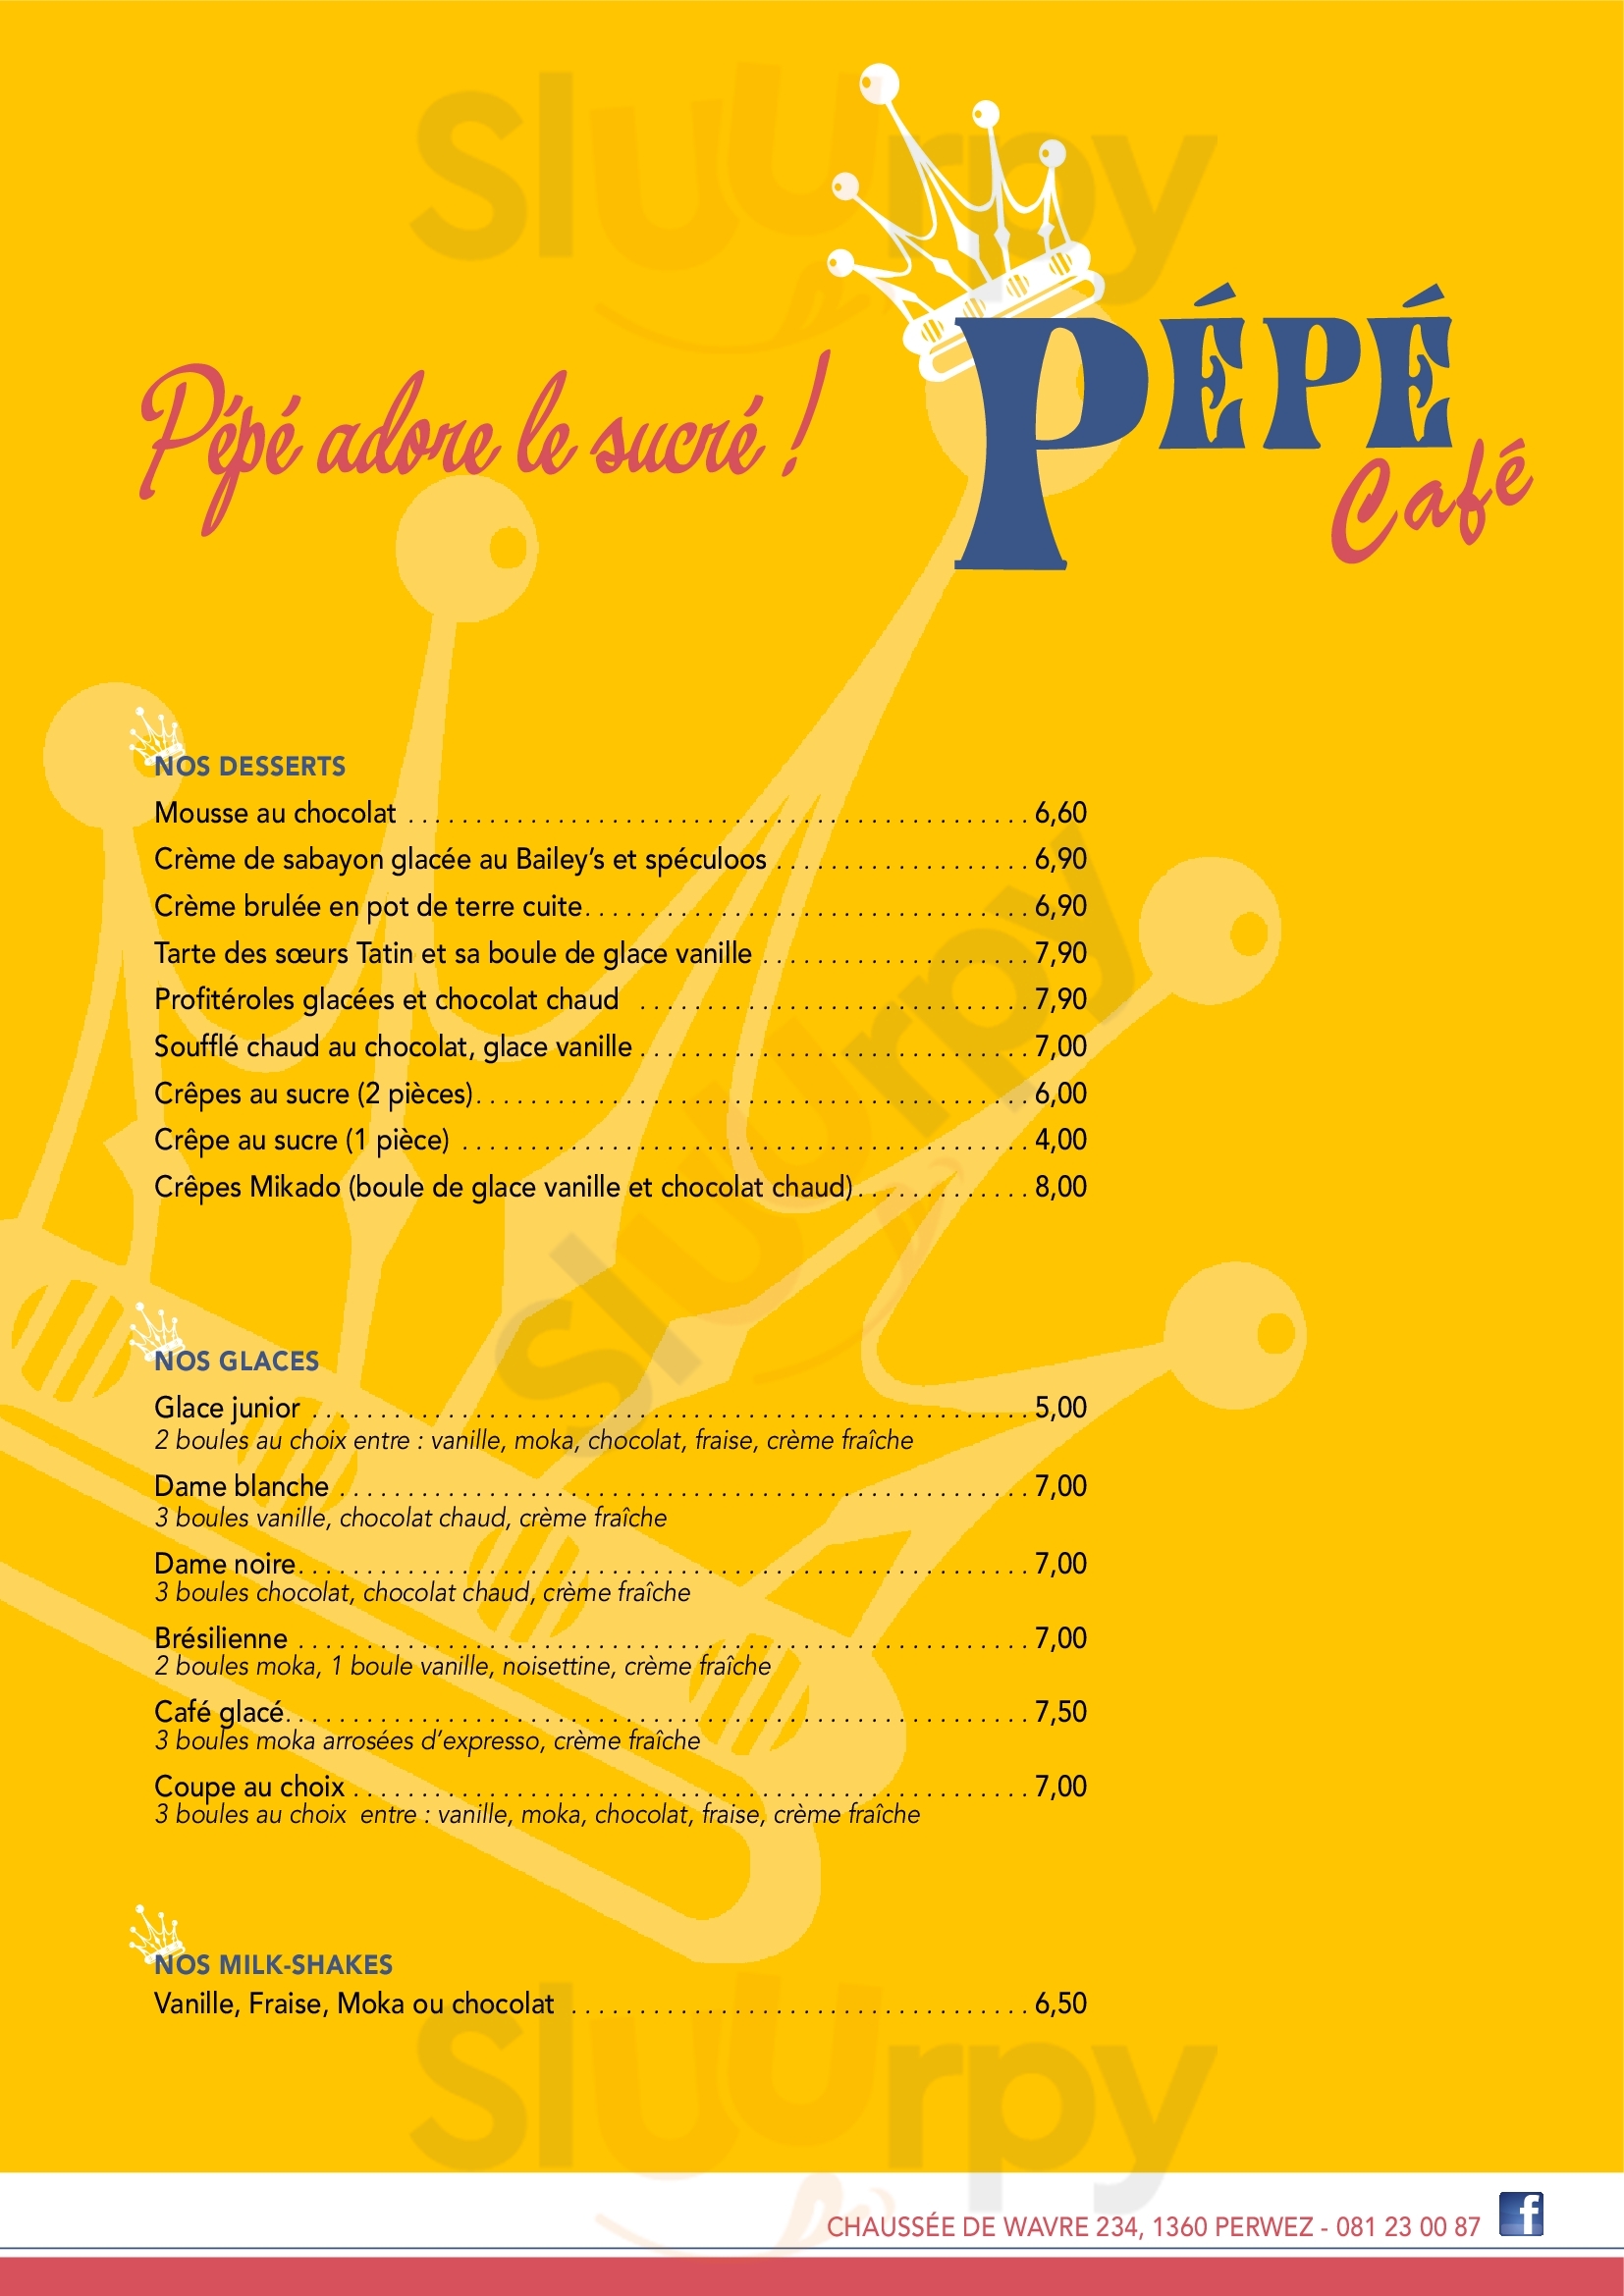 Pepe Cafe Perwez Menu - 1